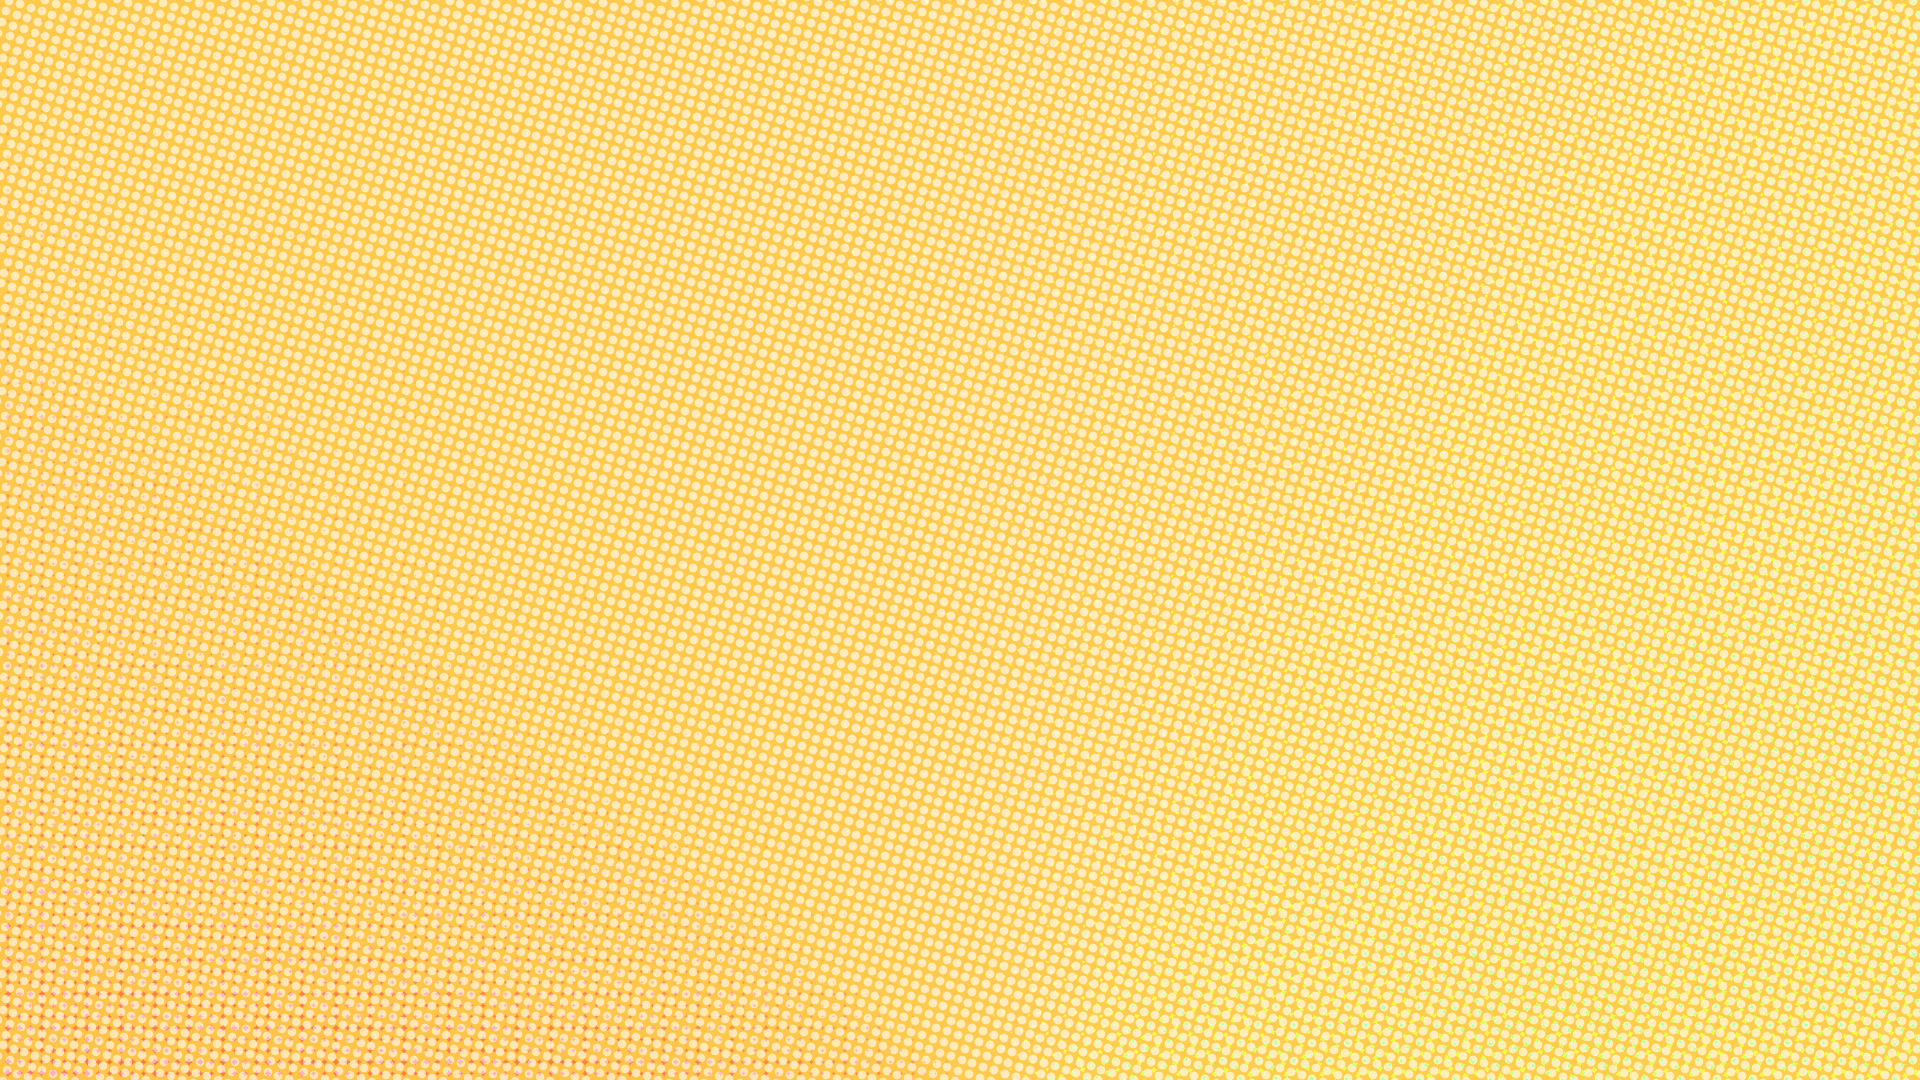 General 1920x1080 polka dots dots tiles minimalism yellow yellow background texture